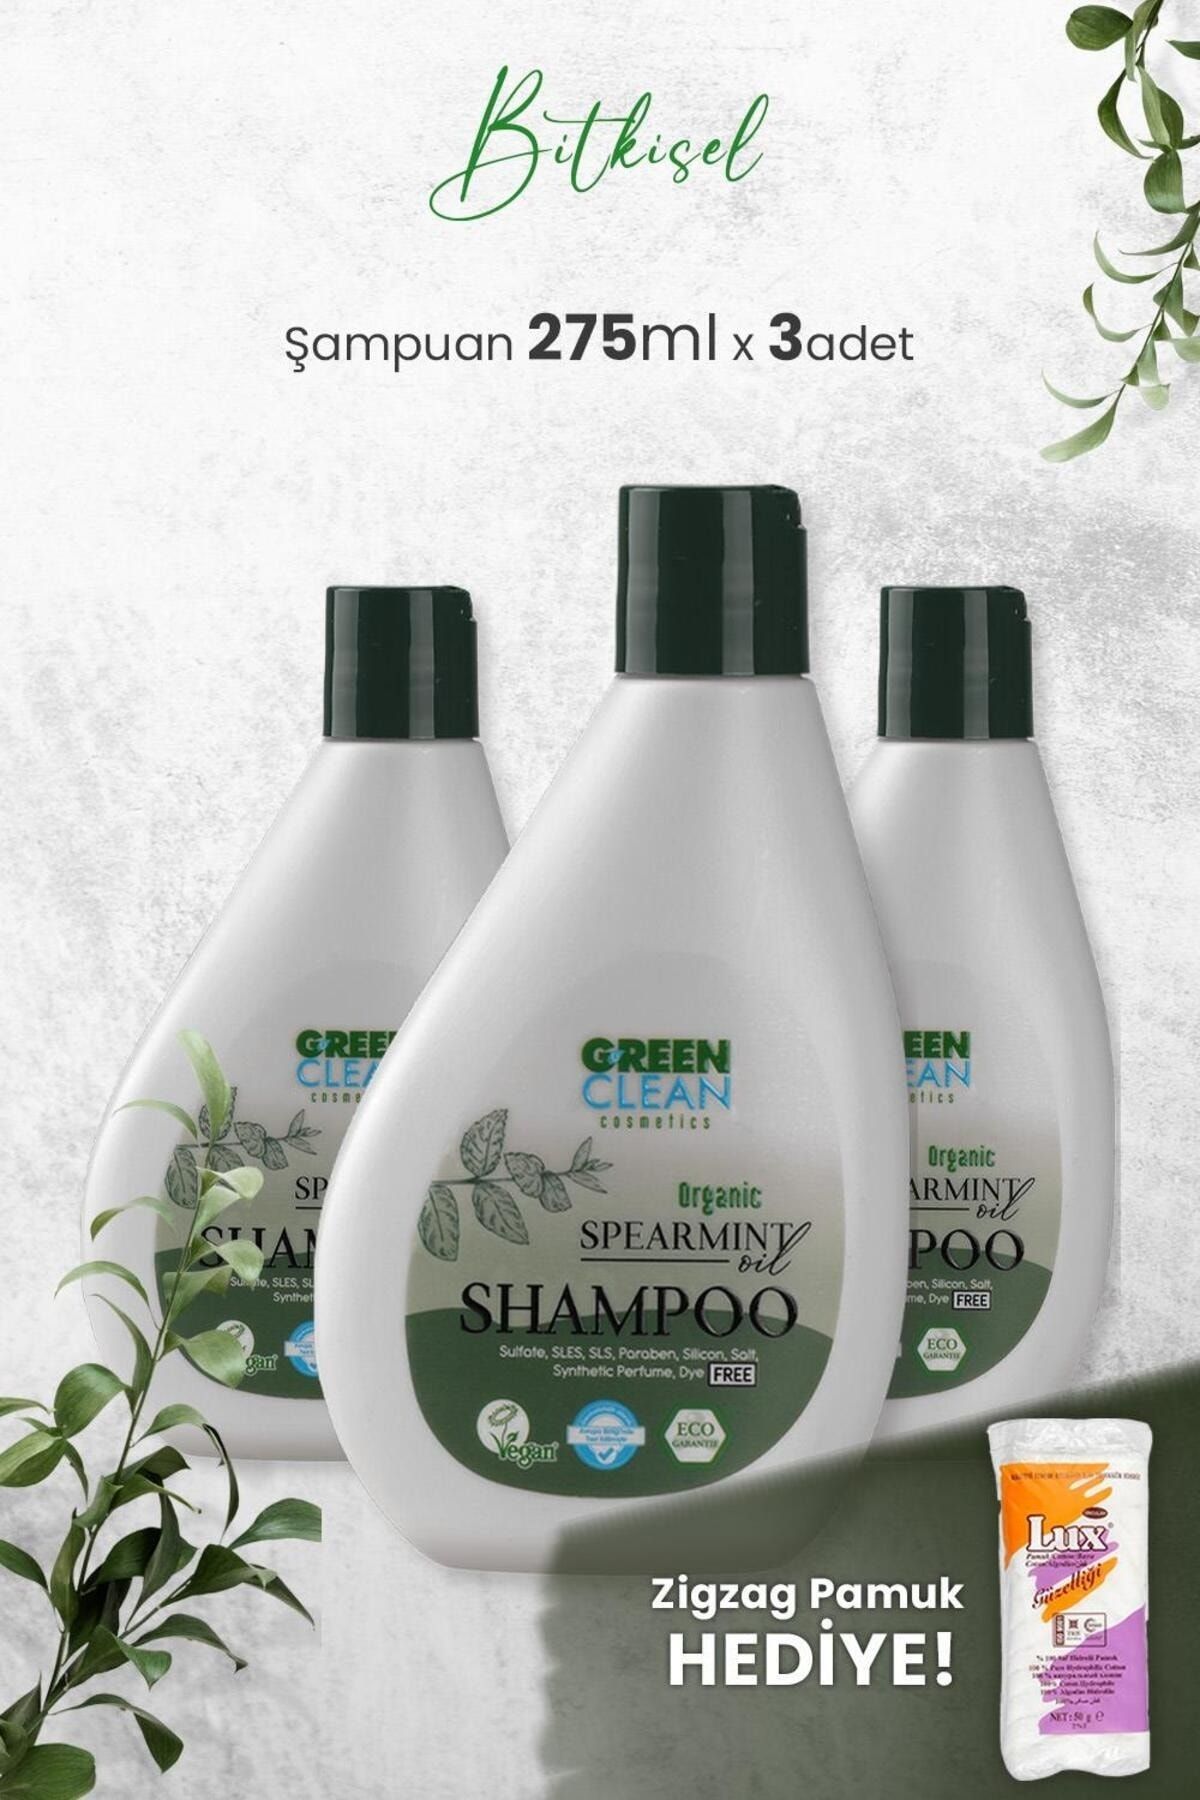 Green Clean Şampuan Spearmint 275 ml x 3 Adet ve Hediyeli